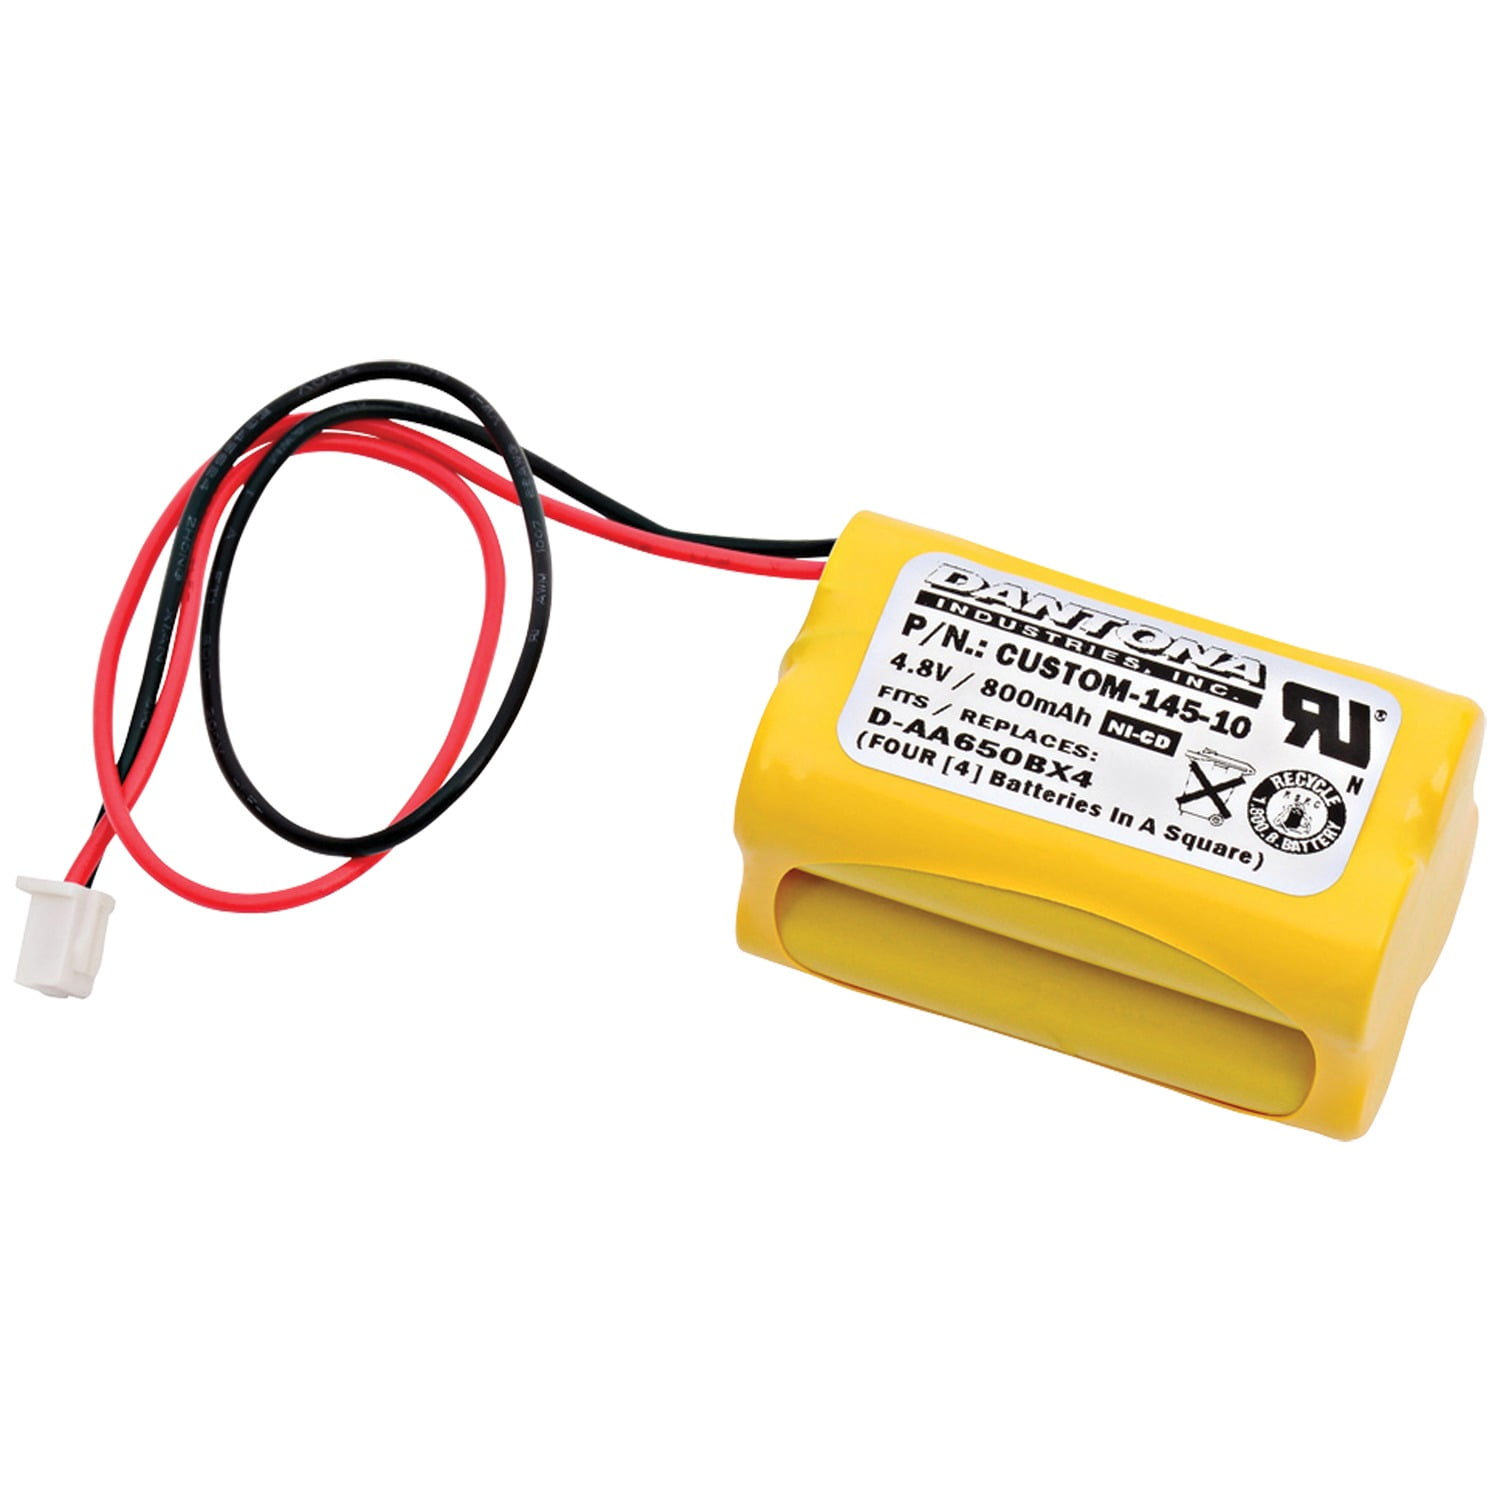 Picture of Dantona CUSTOM-145-10 Emergi-Lite Replacement Emergency Light Battery